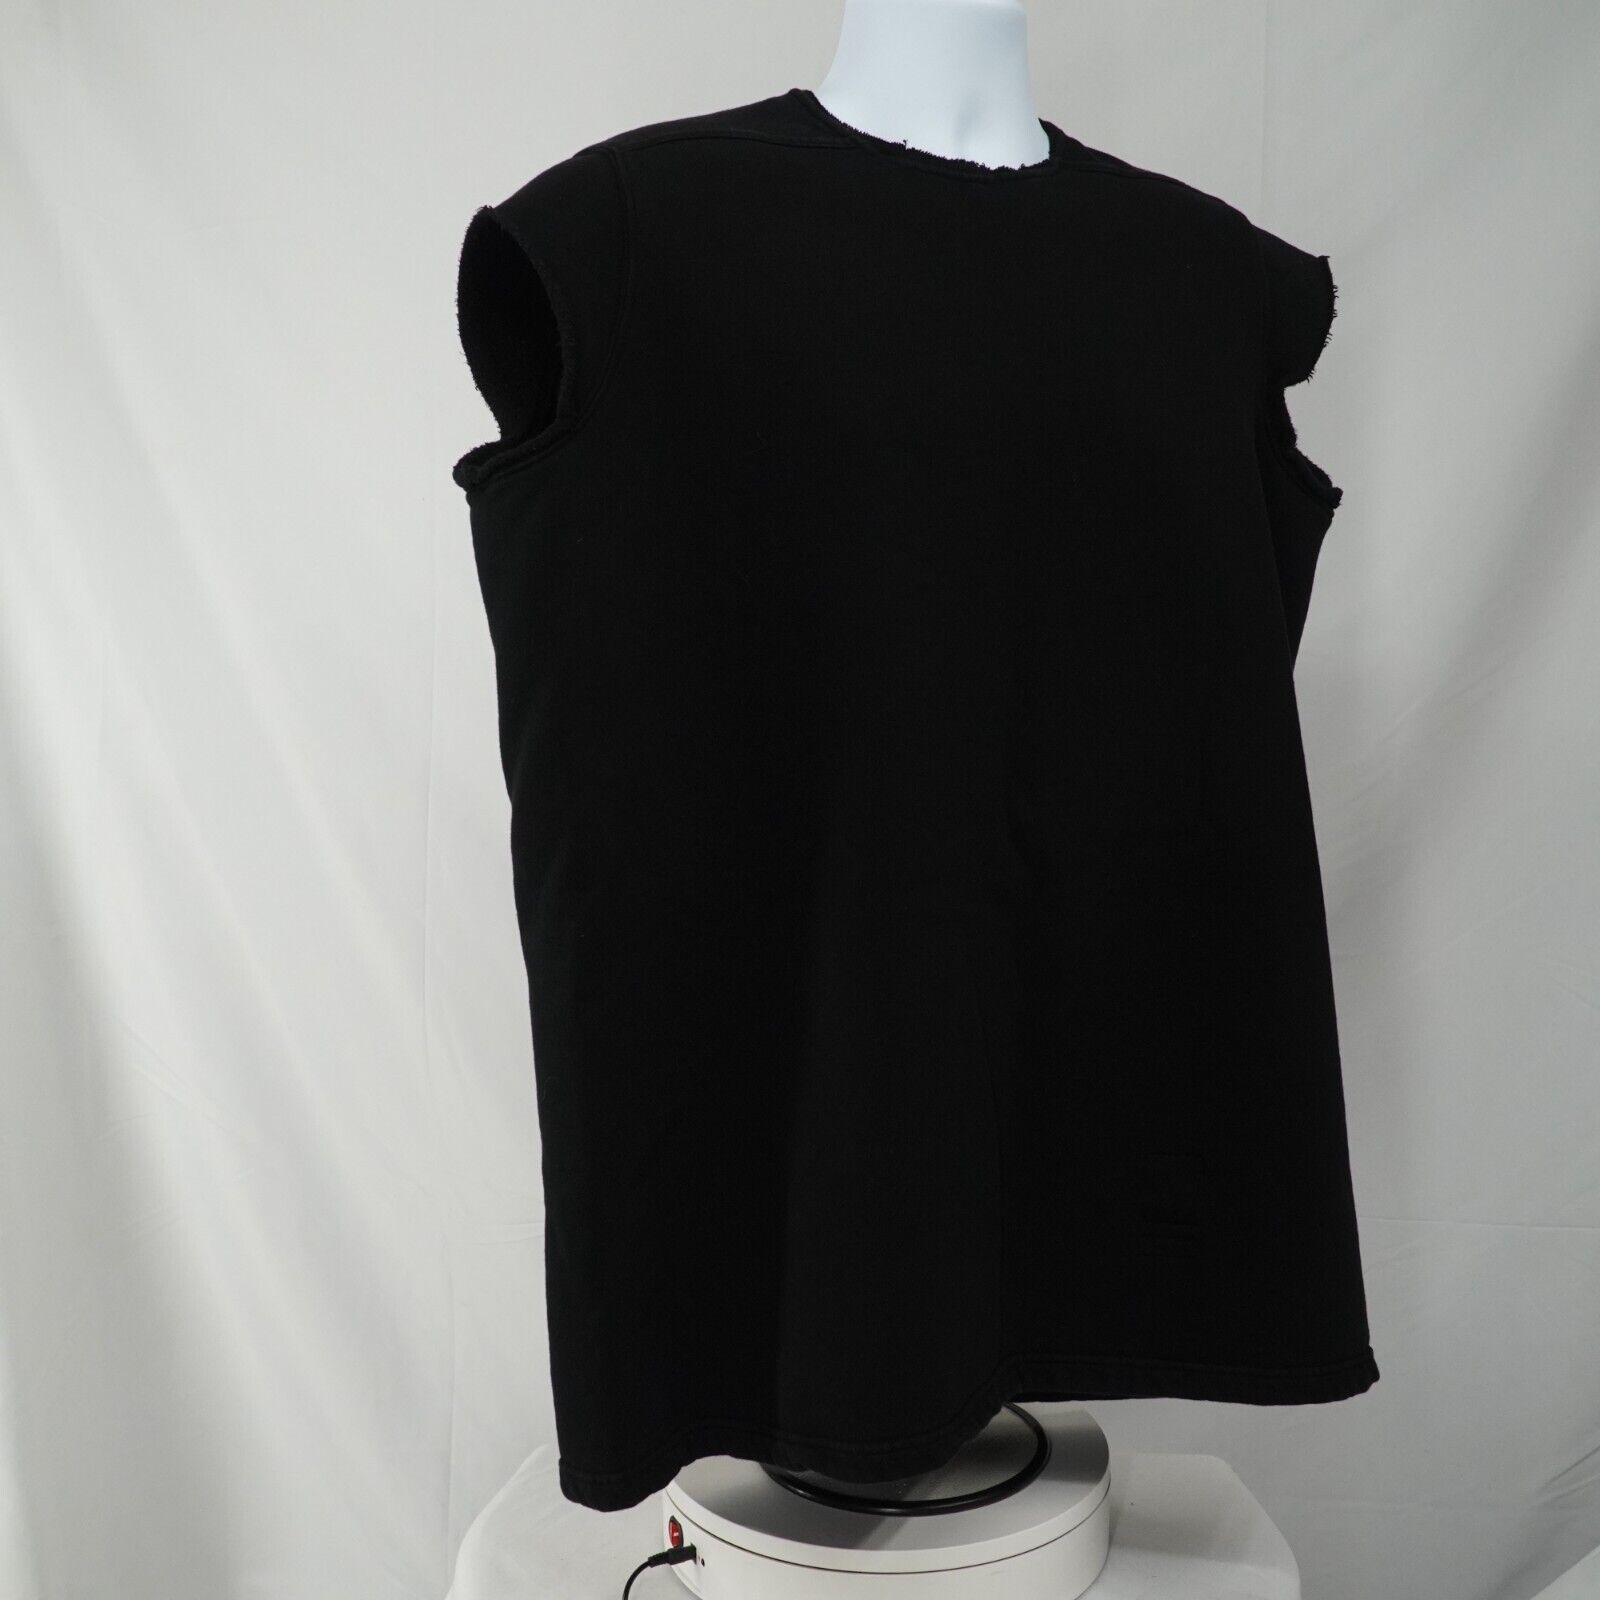 Jumbo Black Sleeveless Sweater Shirt Oversized SS16 Cyclops - 18